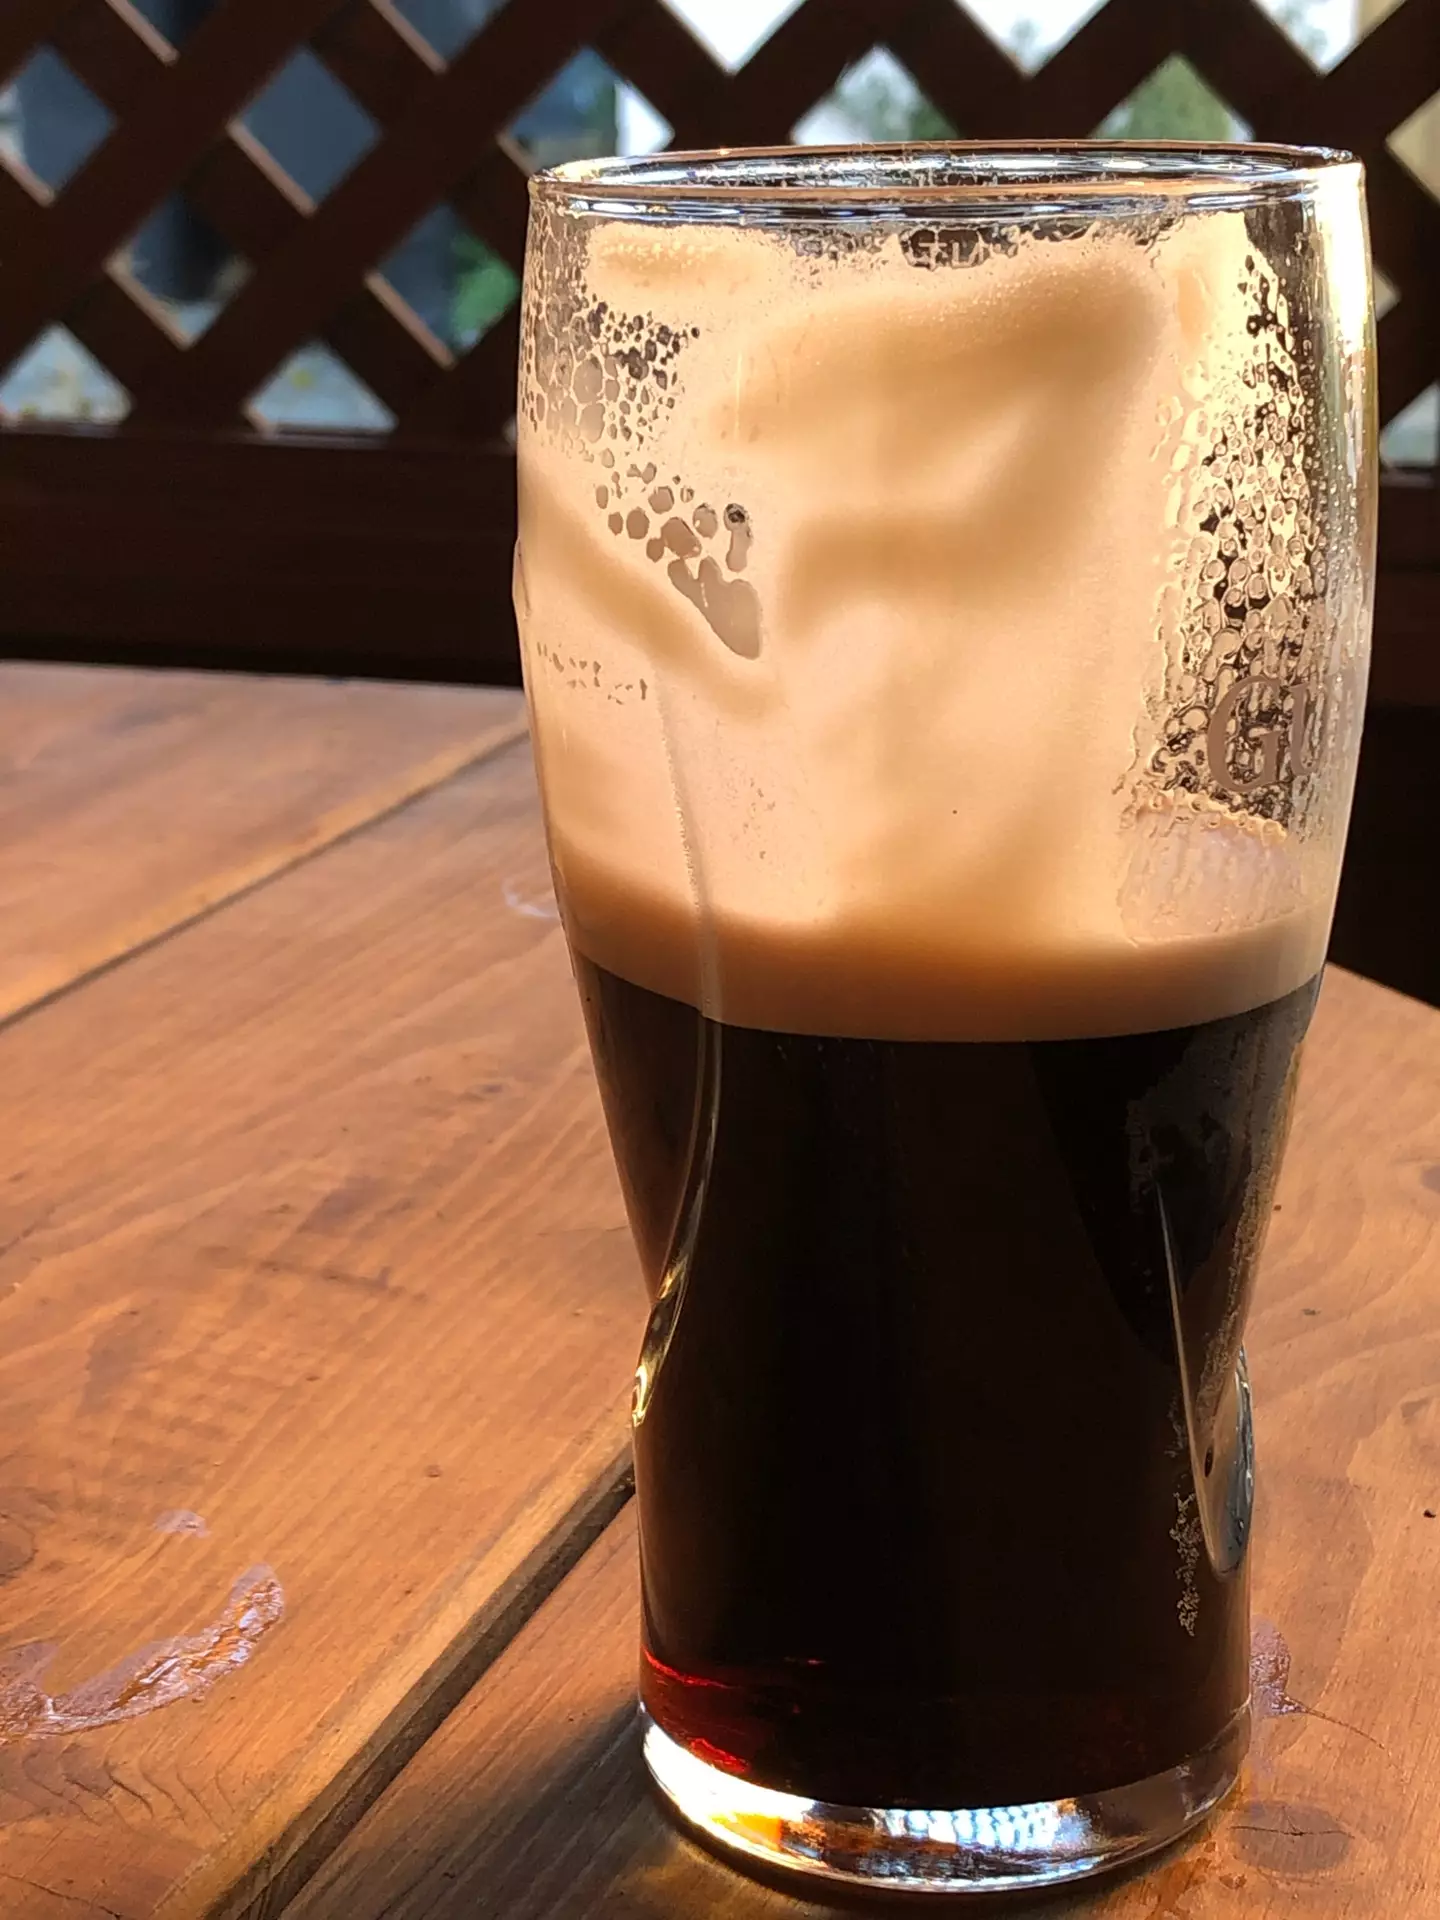 Guinness has never tasted better at £2.99.